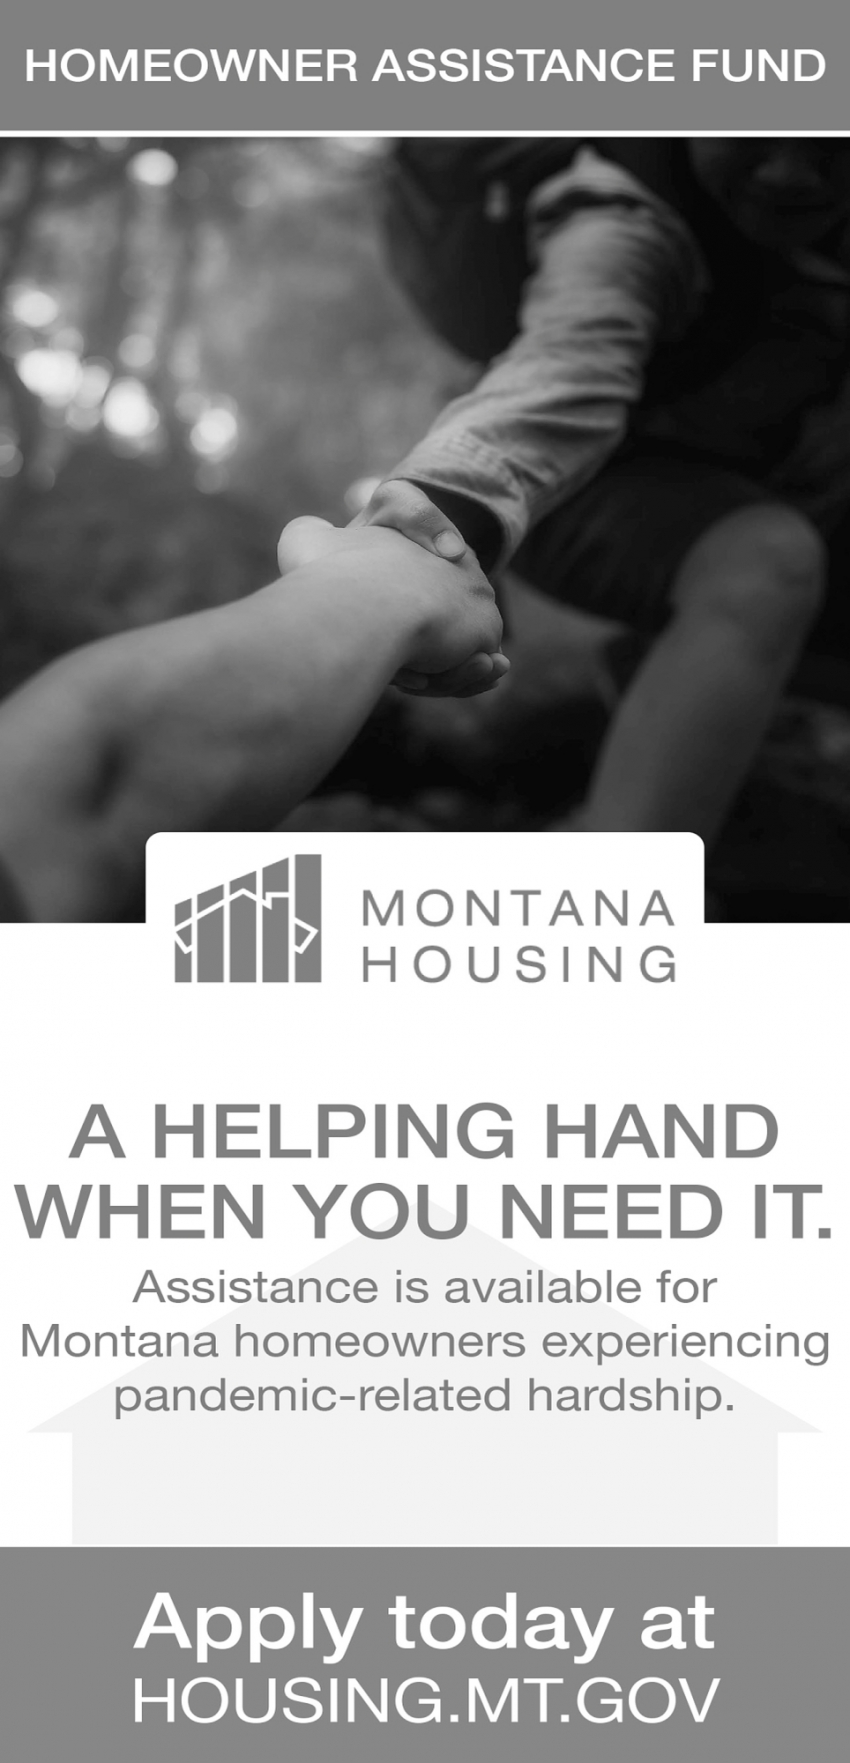 Montanna's Homeowner Assistance Fund